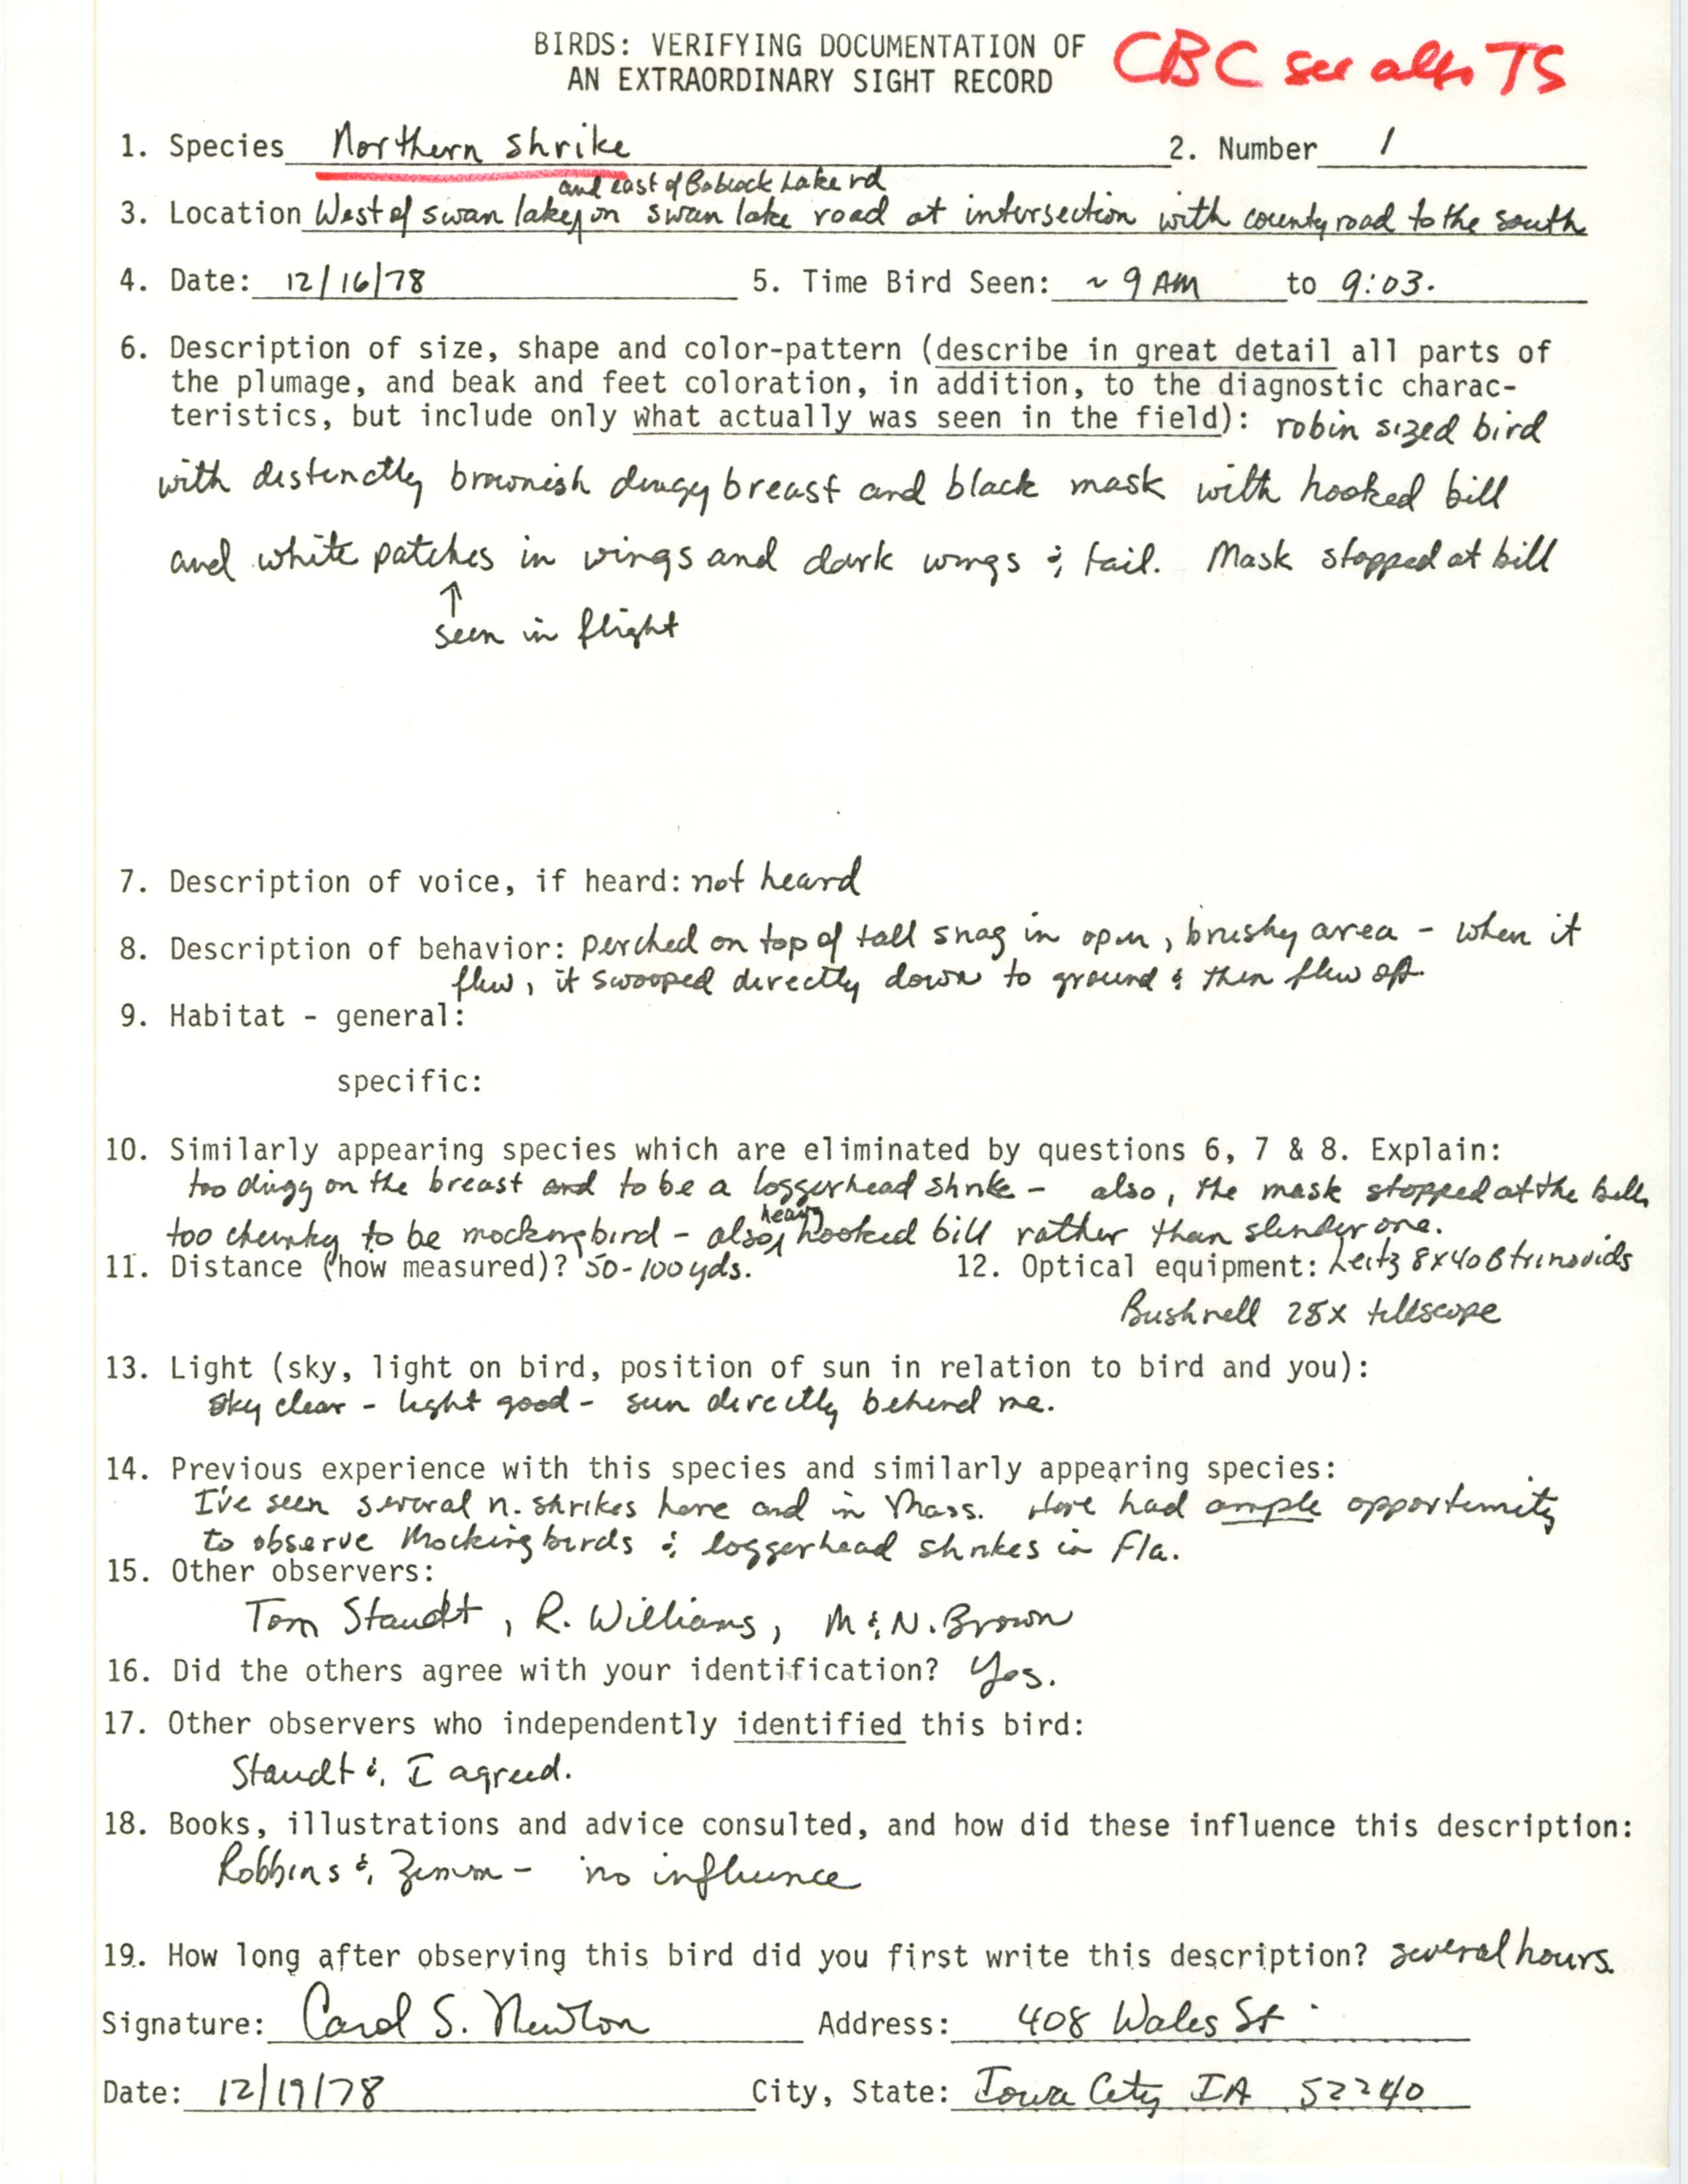 Rare bird documentation form for Northern Shrike at Babcock Access, 1978